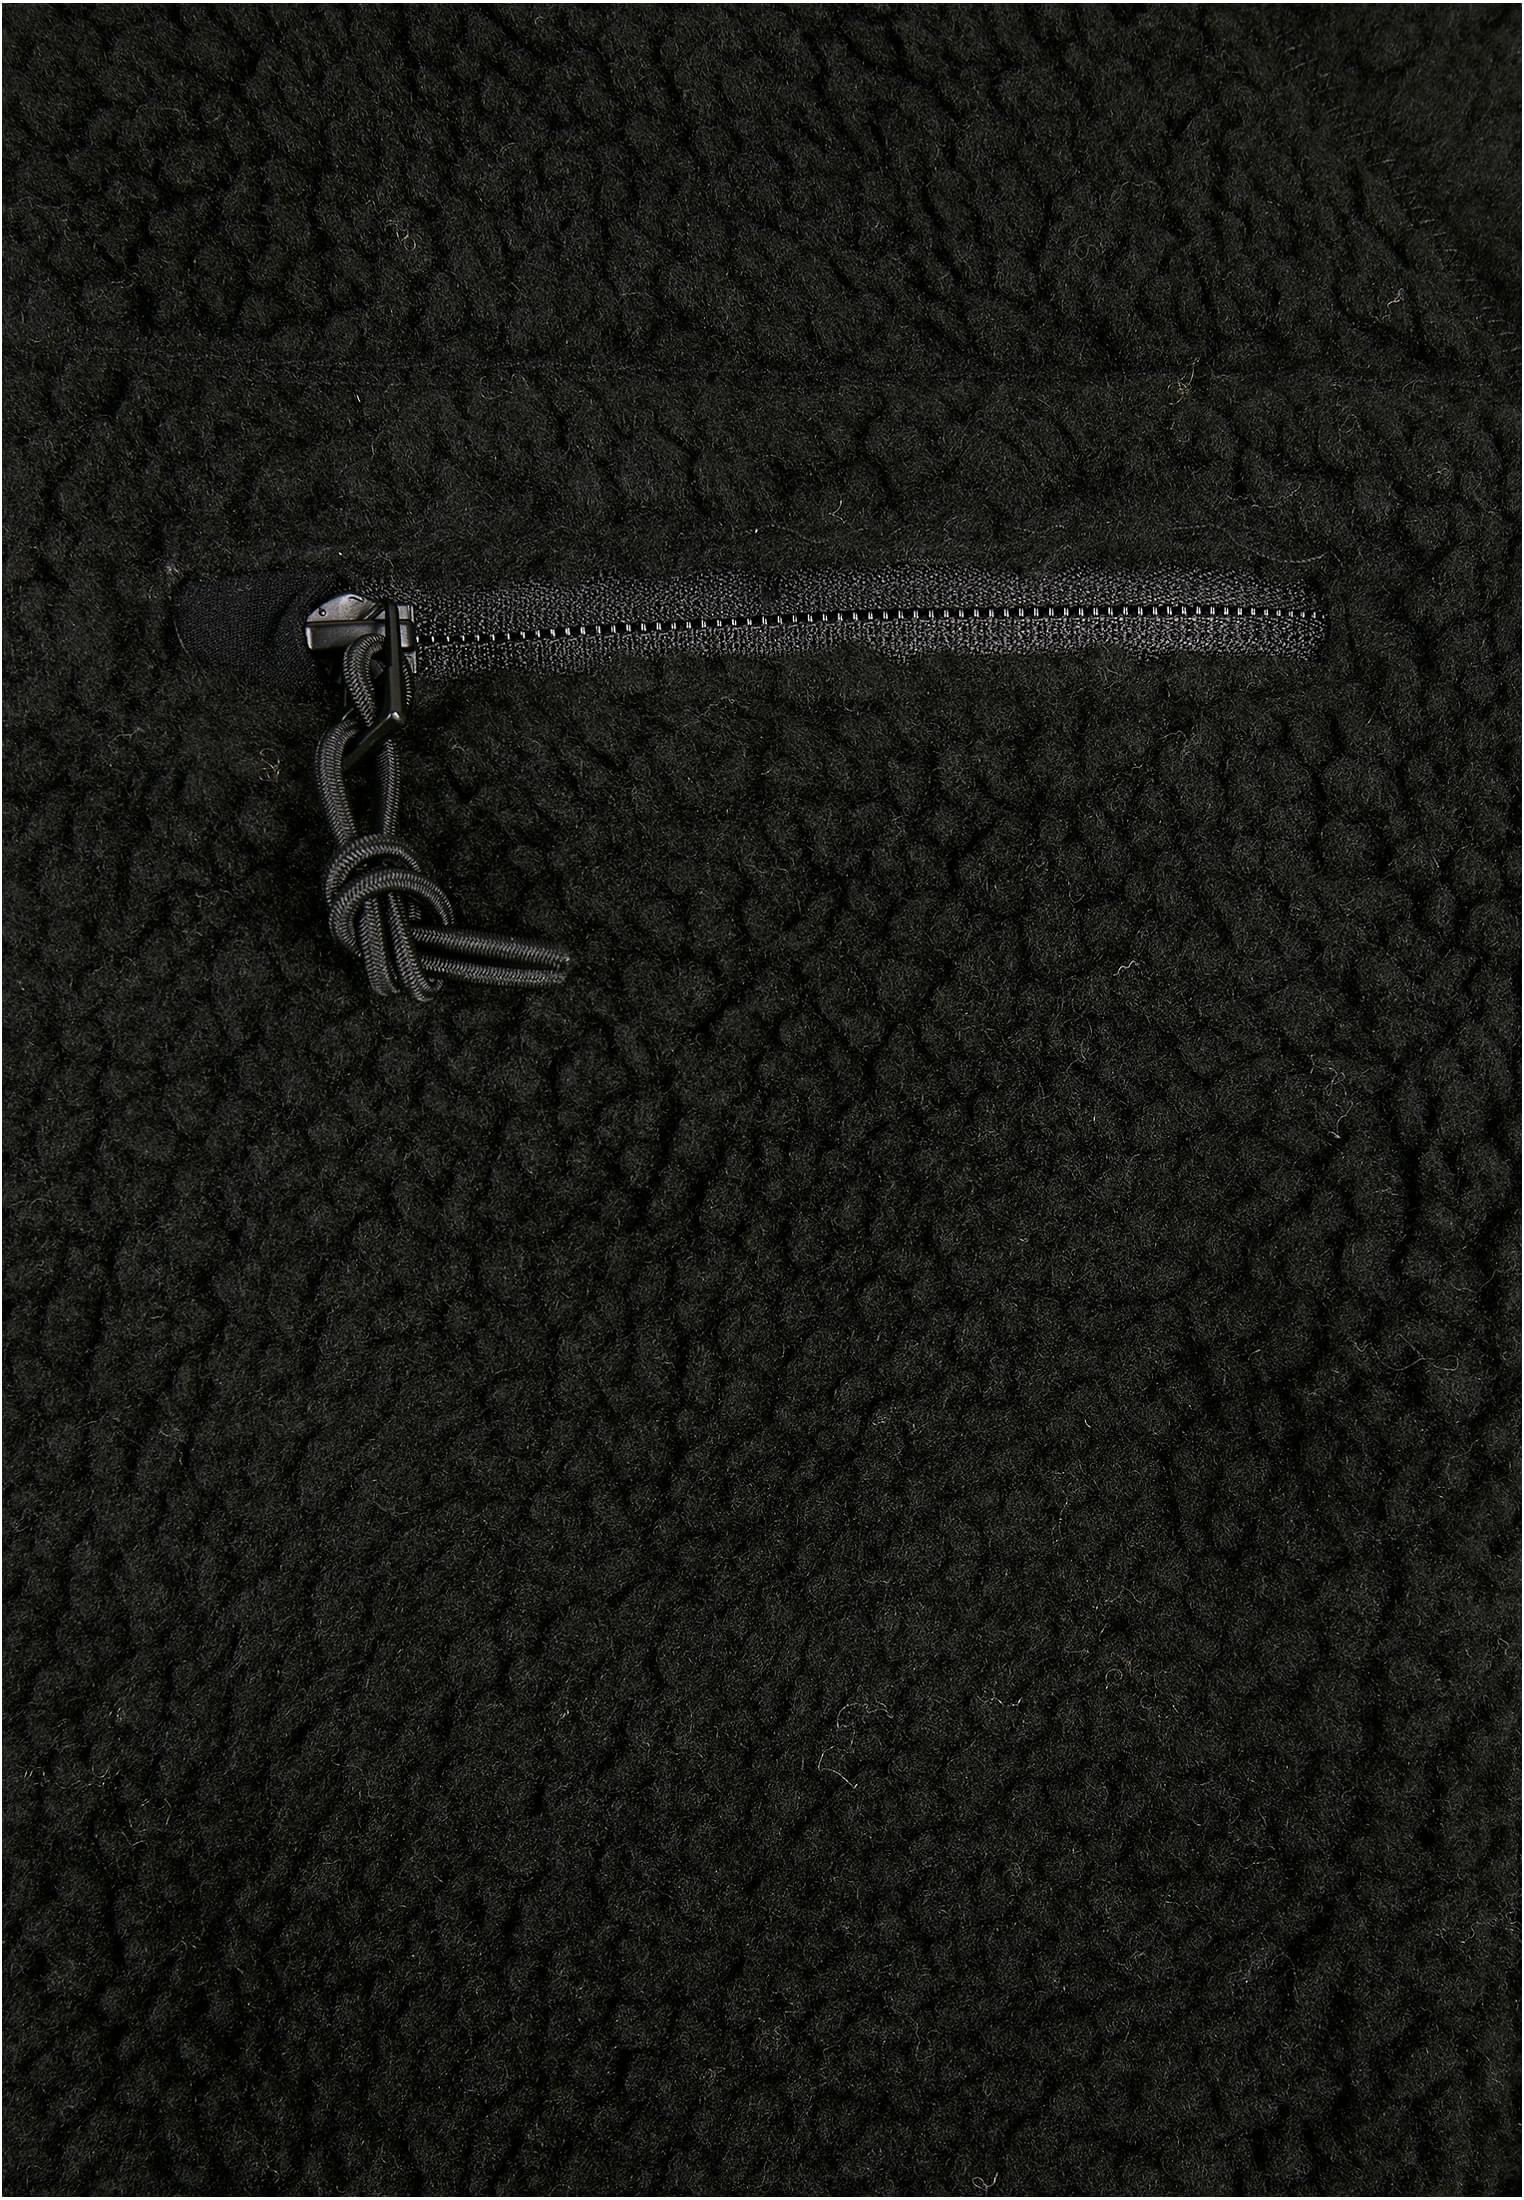 Pullover Teddyfleece Worker Jacket in Farbe black